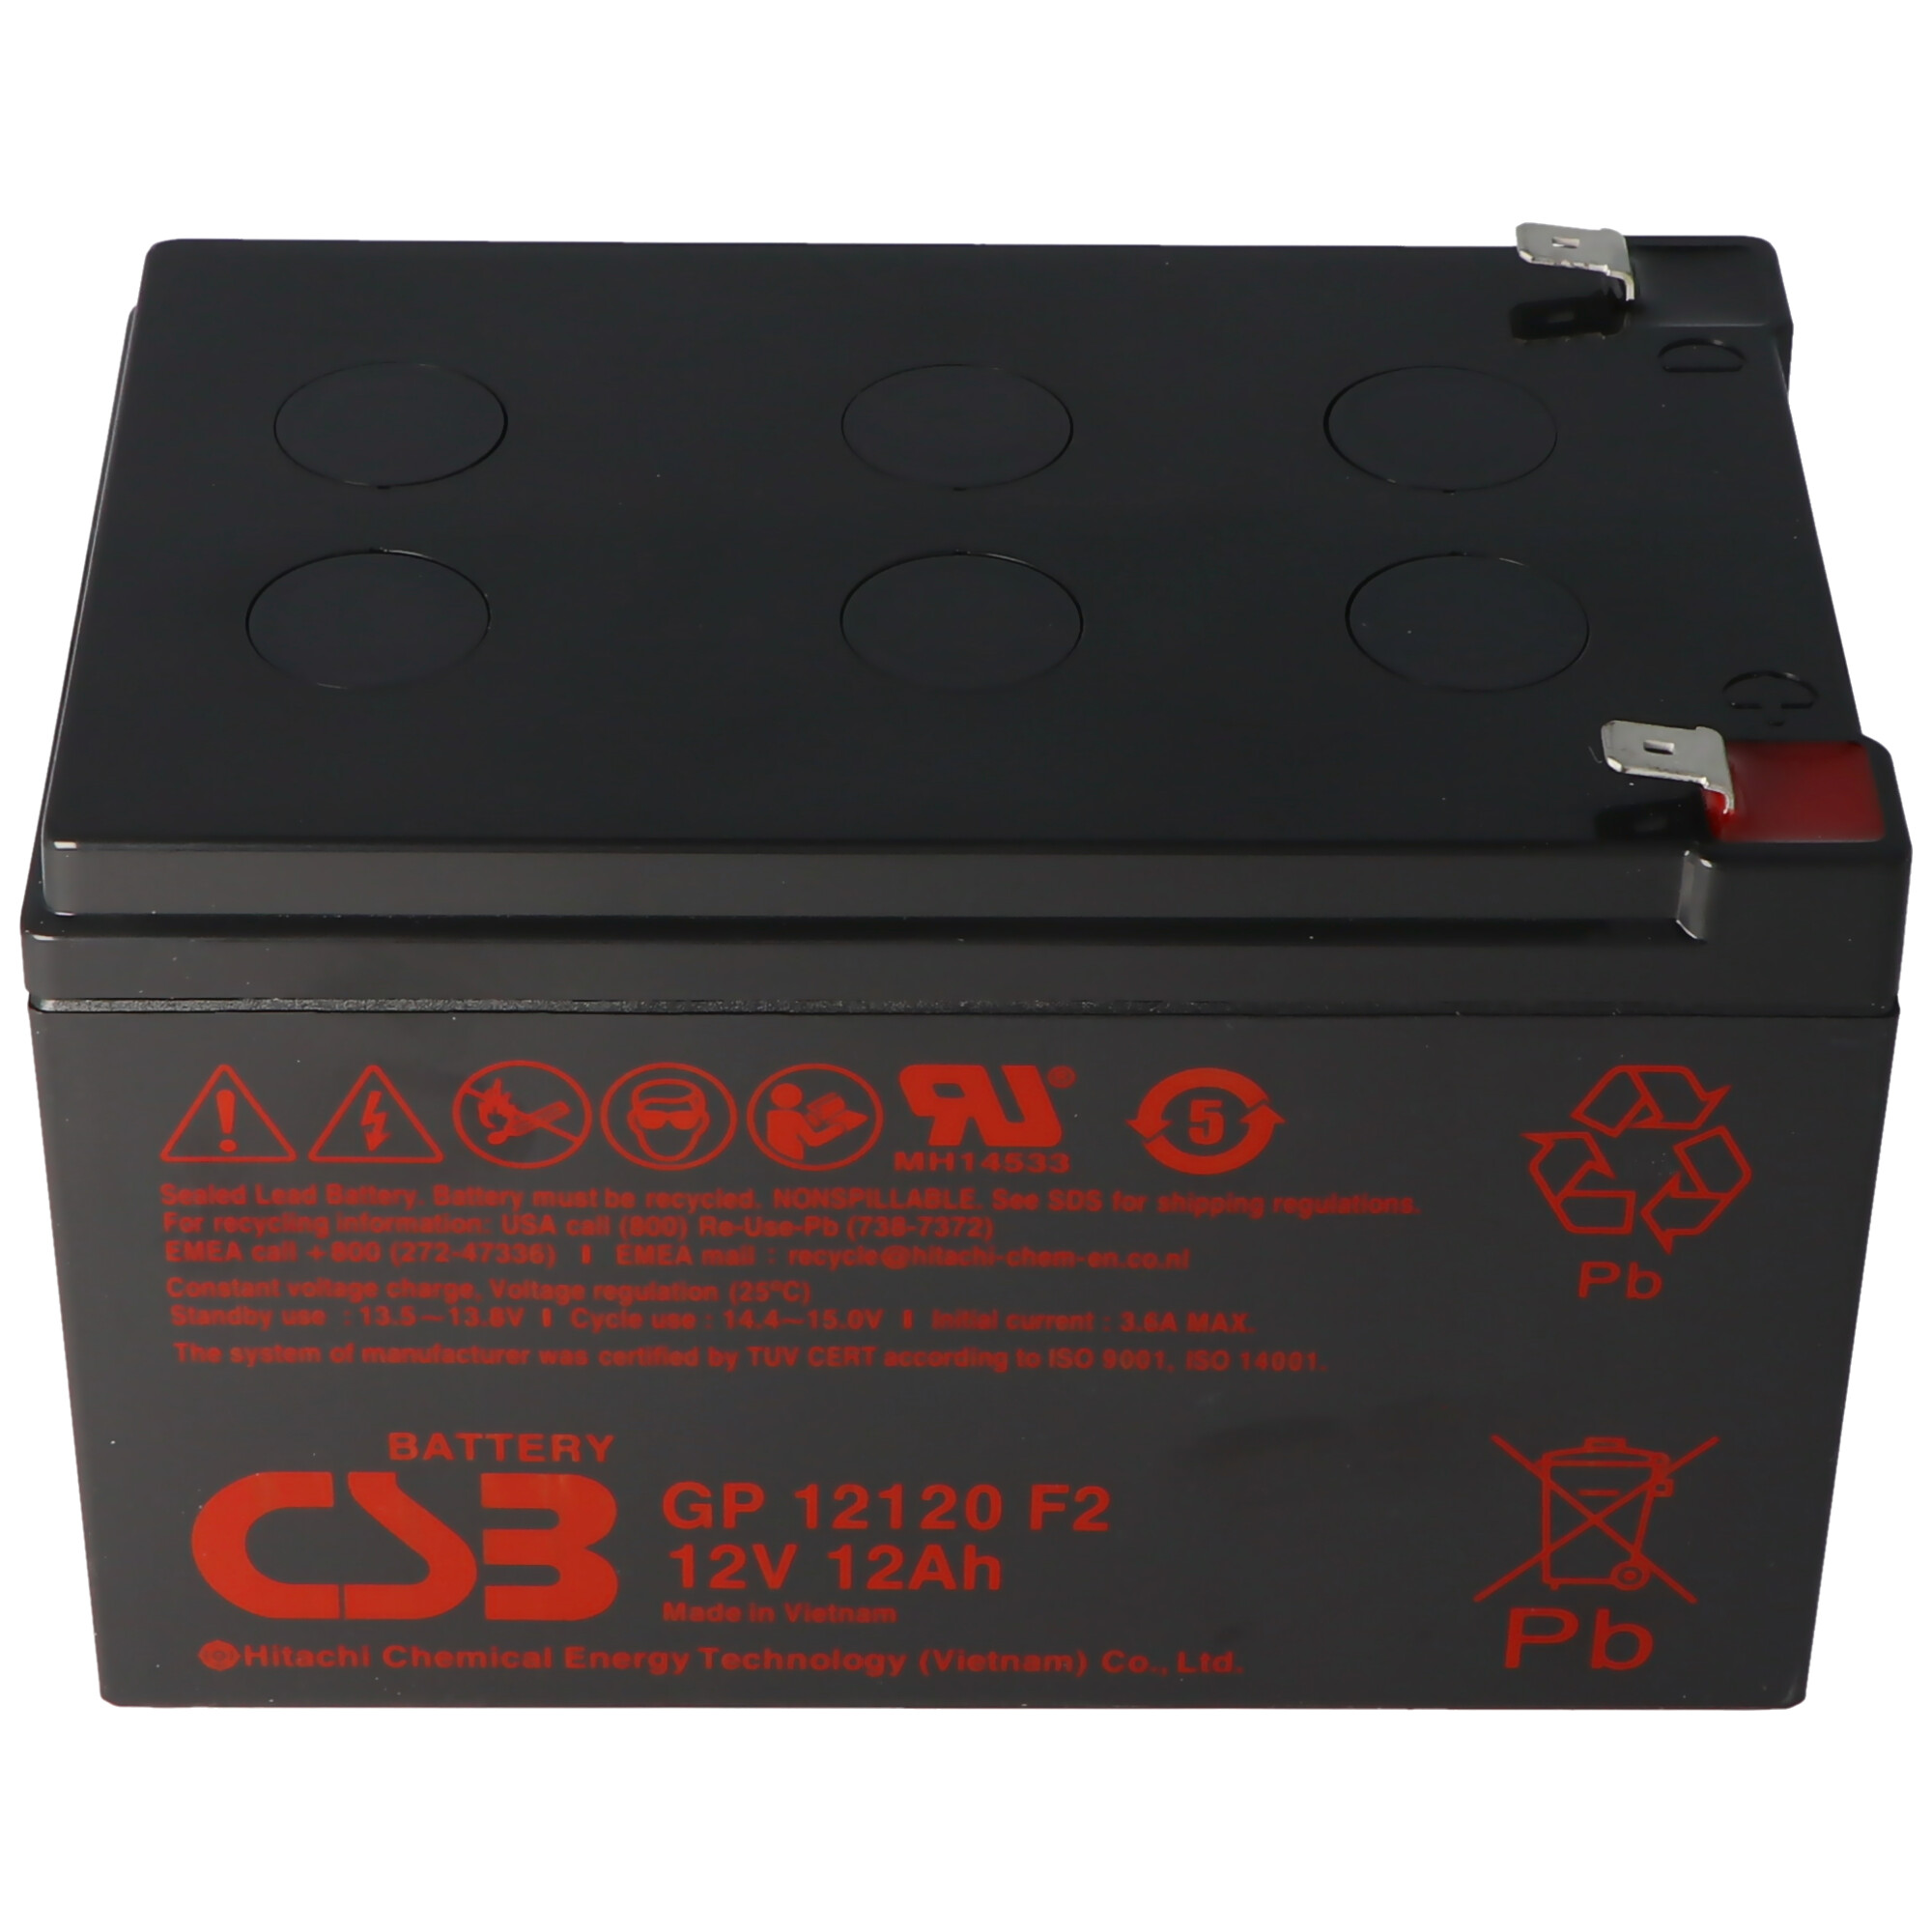 Akku passend für APC Ersatzbatterie Nr. 4 APC-RBC4, CSB SCD4 Ersatzbatterie geeignet für APC RBC4 mit 12 Volt und 12Ah